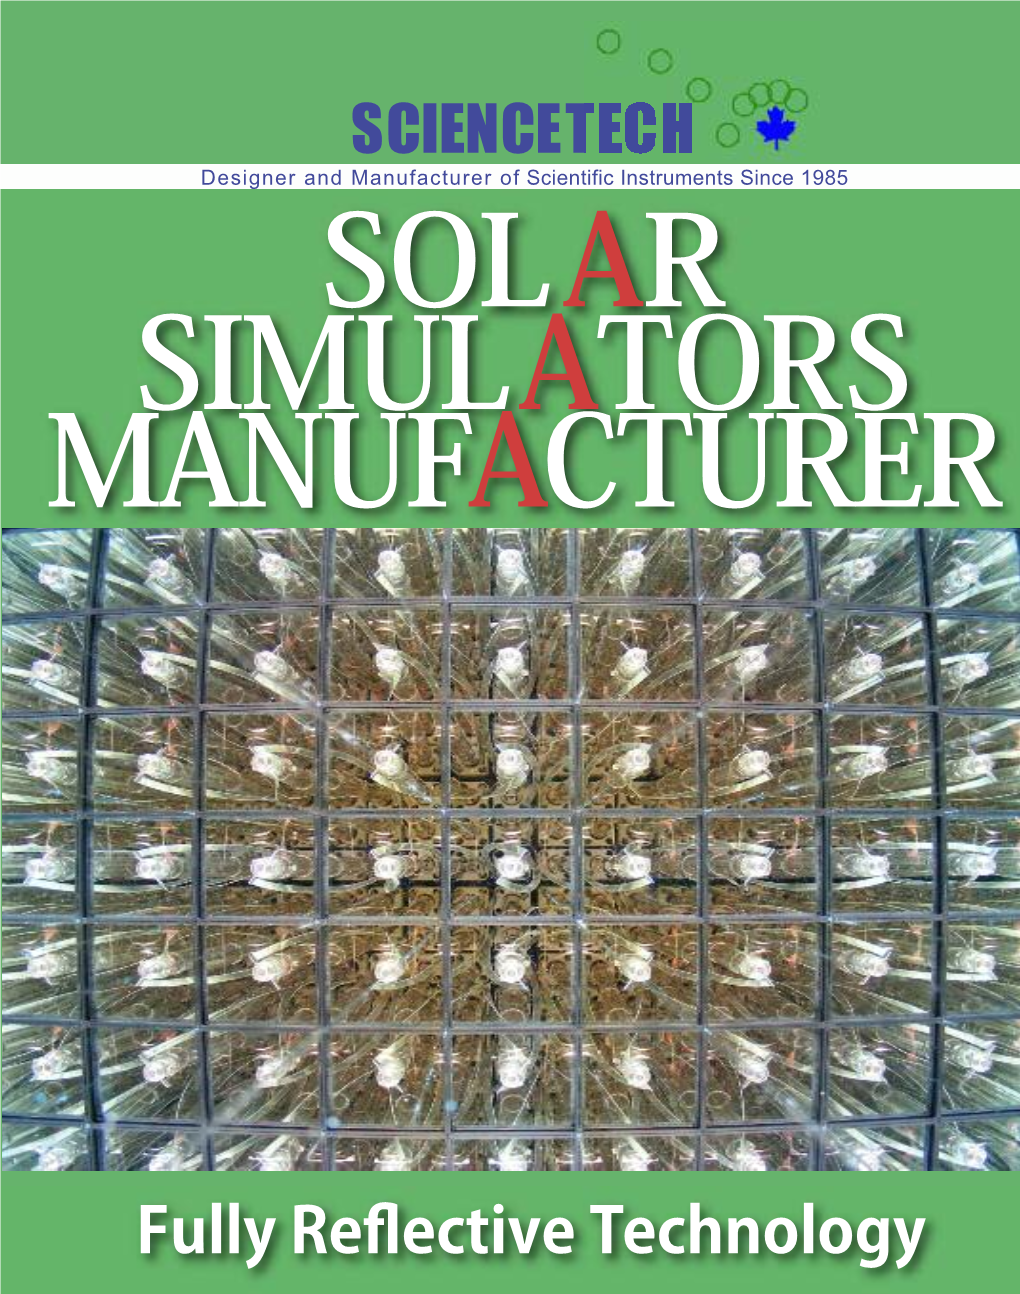 SCIENCETECH SOLAR SIMULATORS Fully Reflective Design